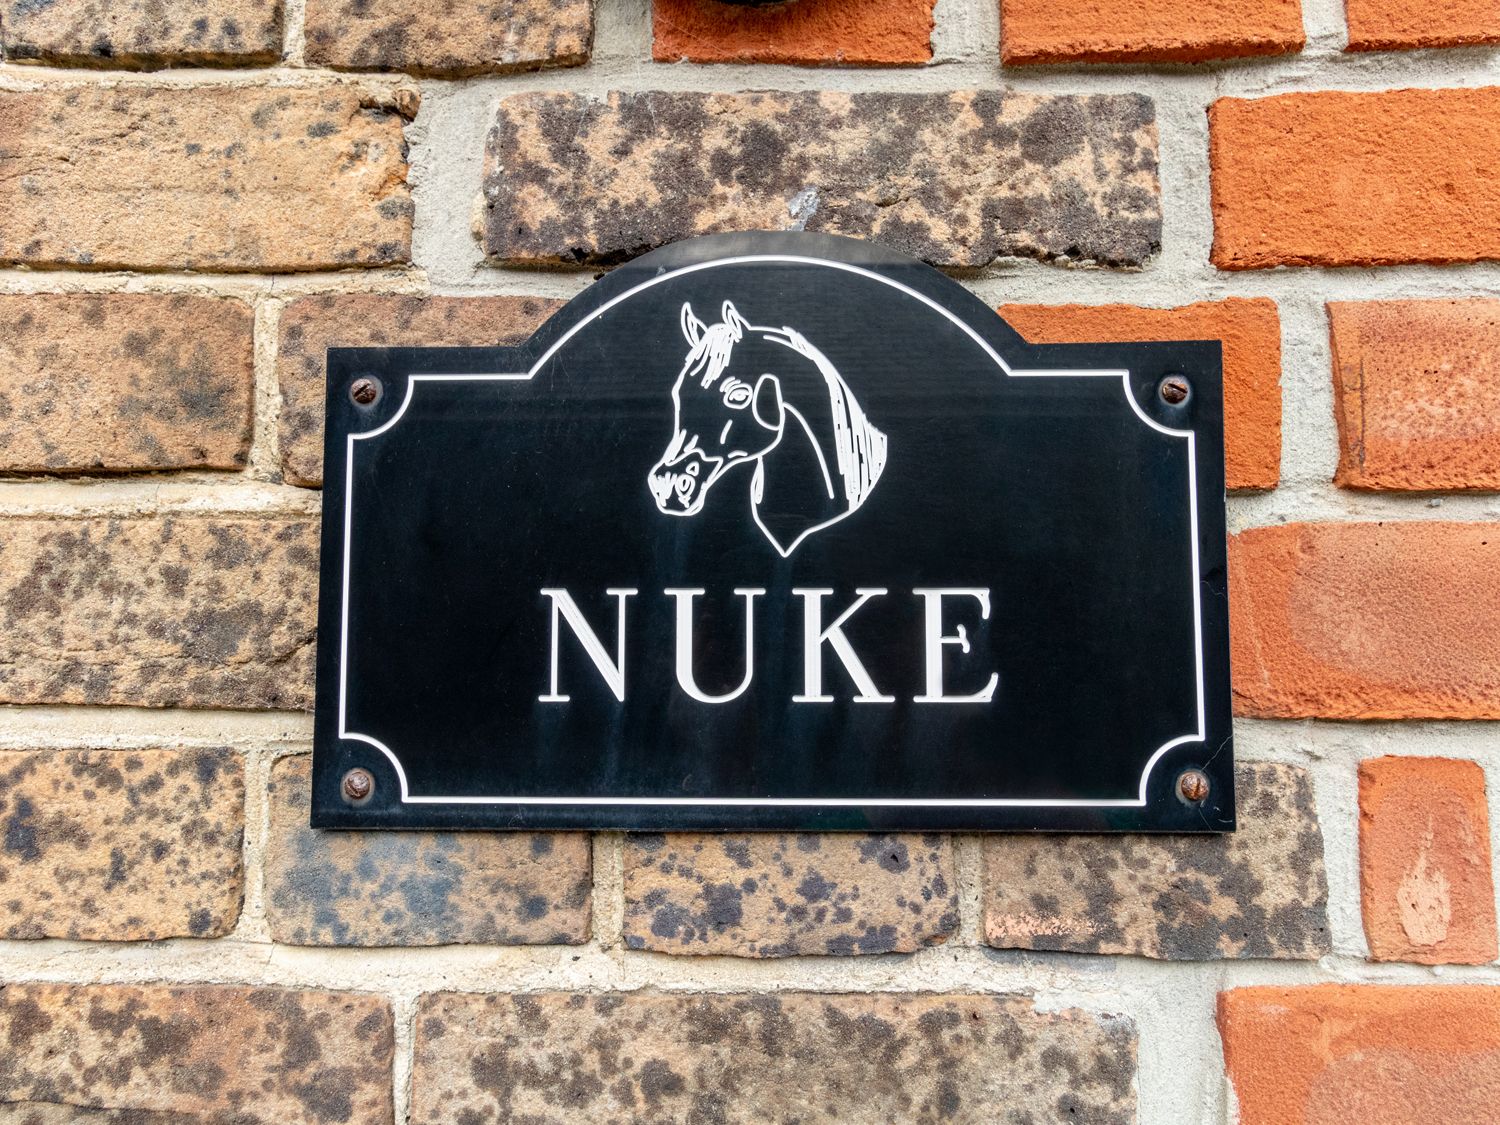 Nuke, Weymouth